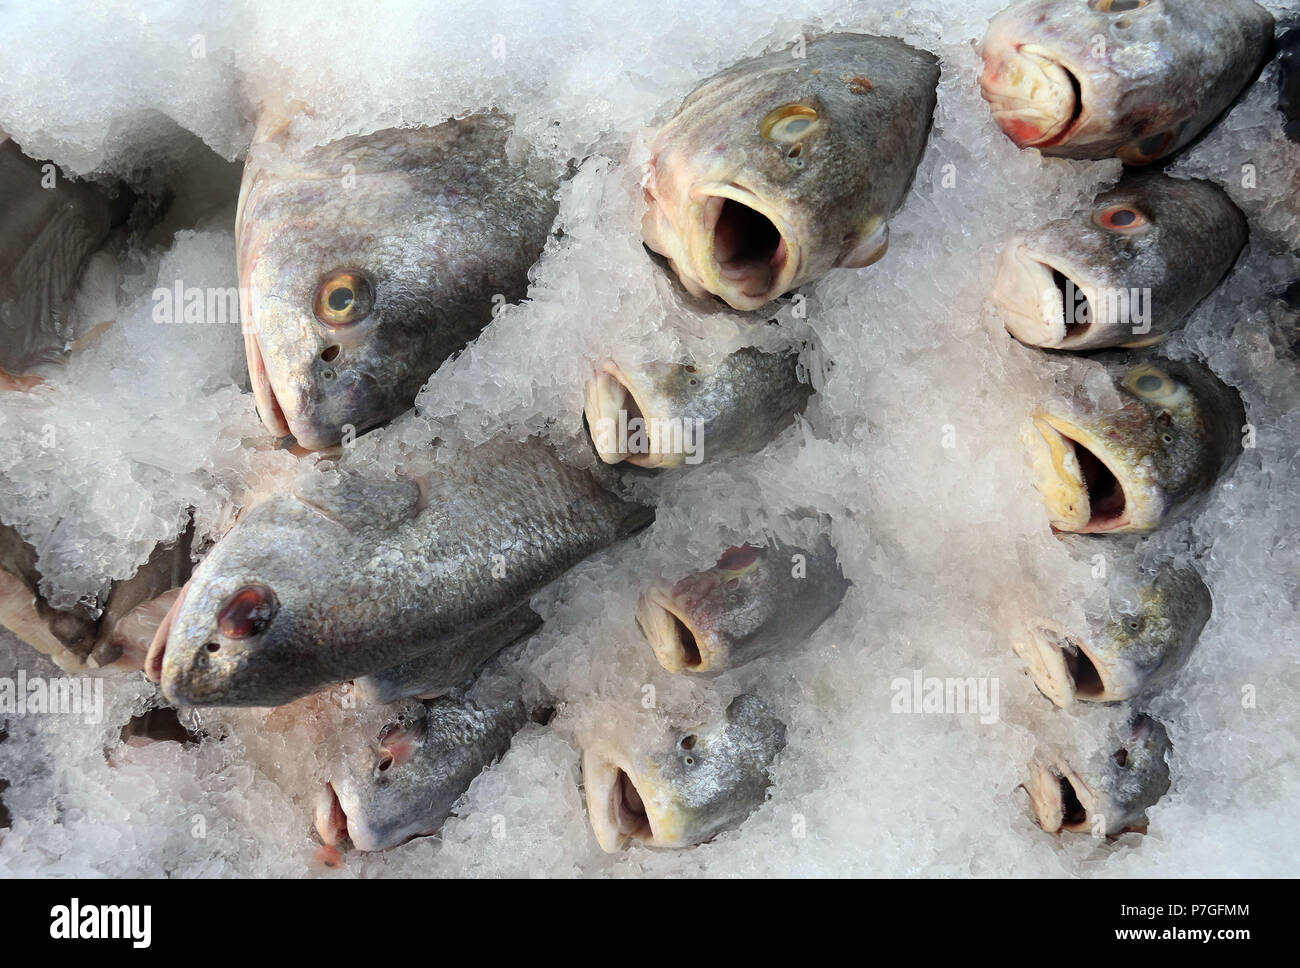 Perch fish on ice at fish market Stock Photo